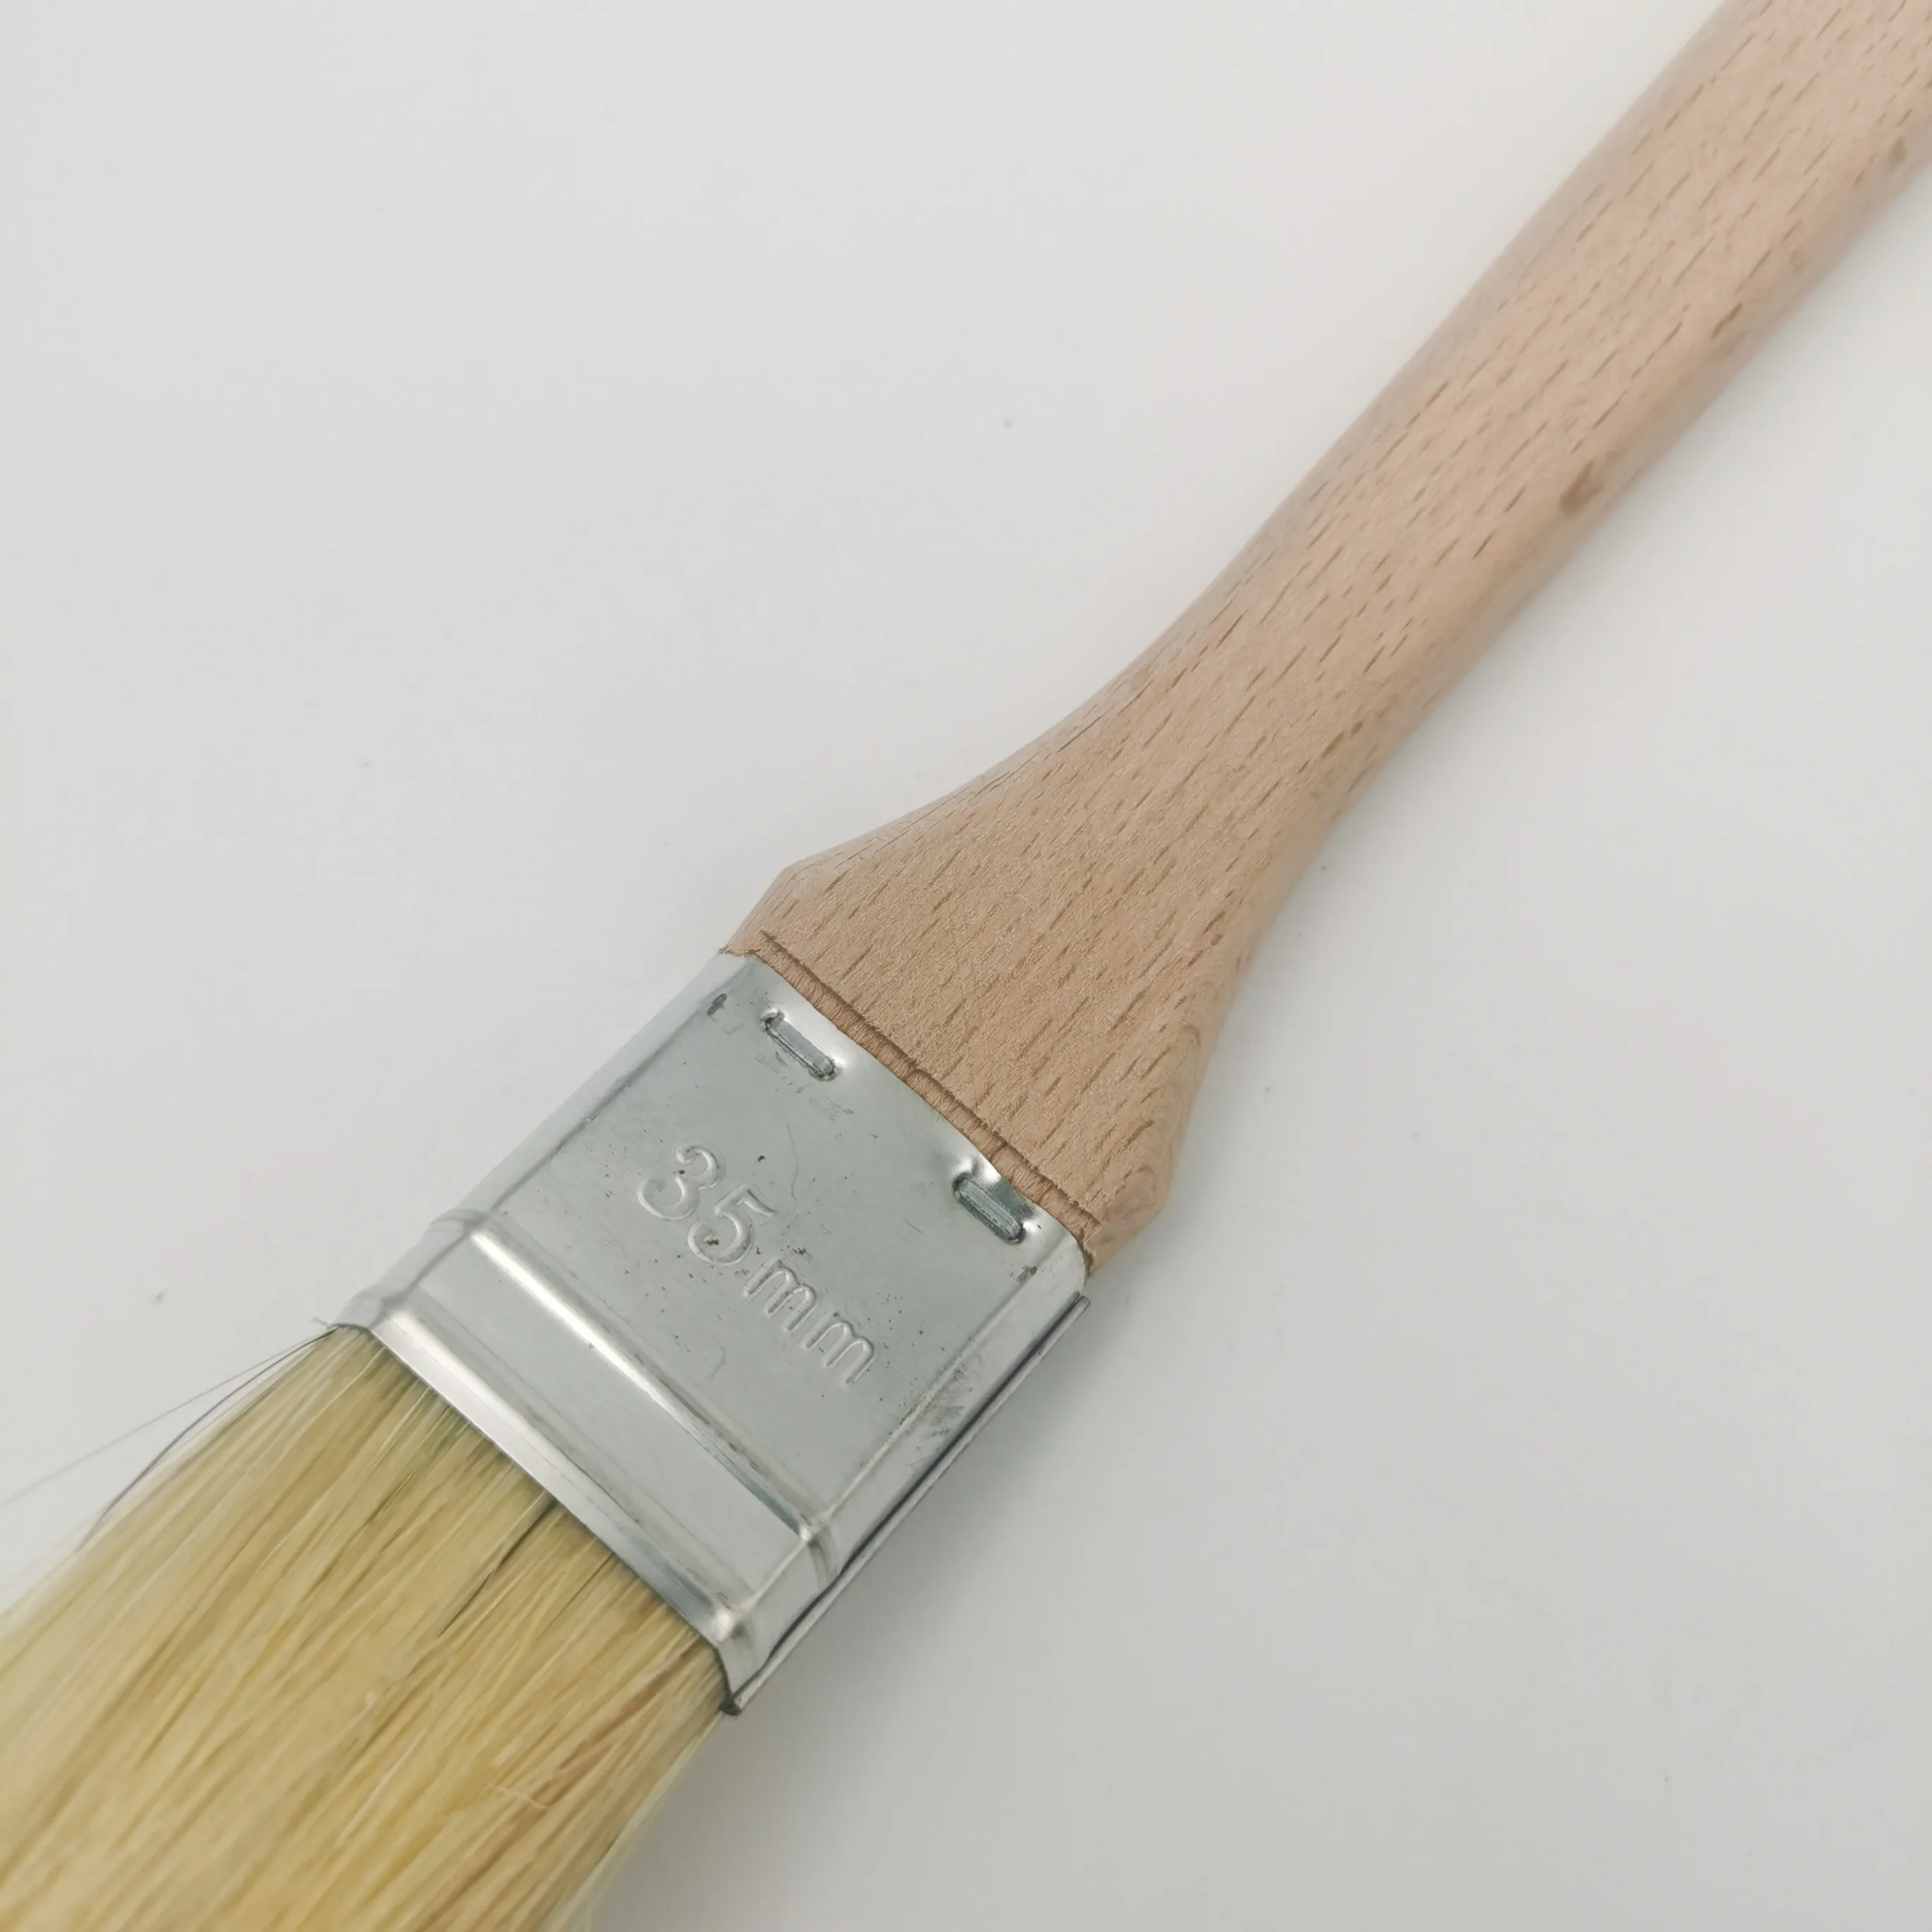 APPROVED VENDOR Paint Brush: Bent Radiator Brush, 2 in, Mixed, China Hair